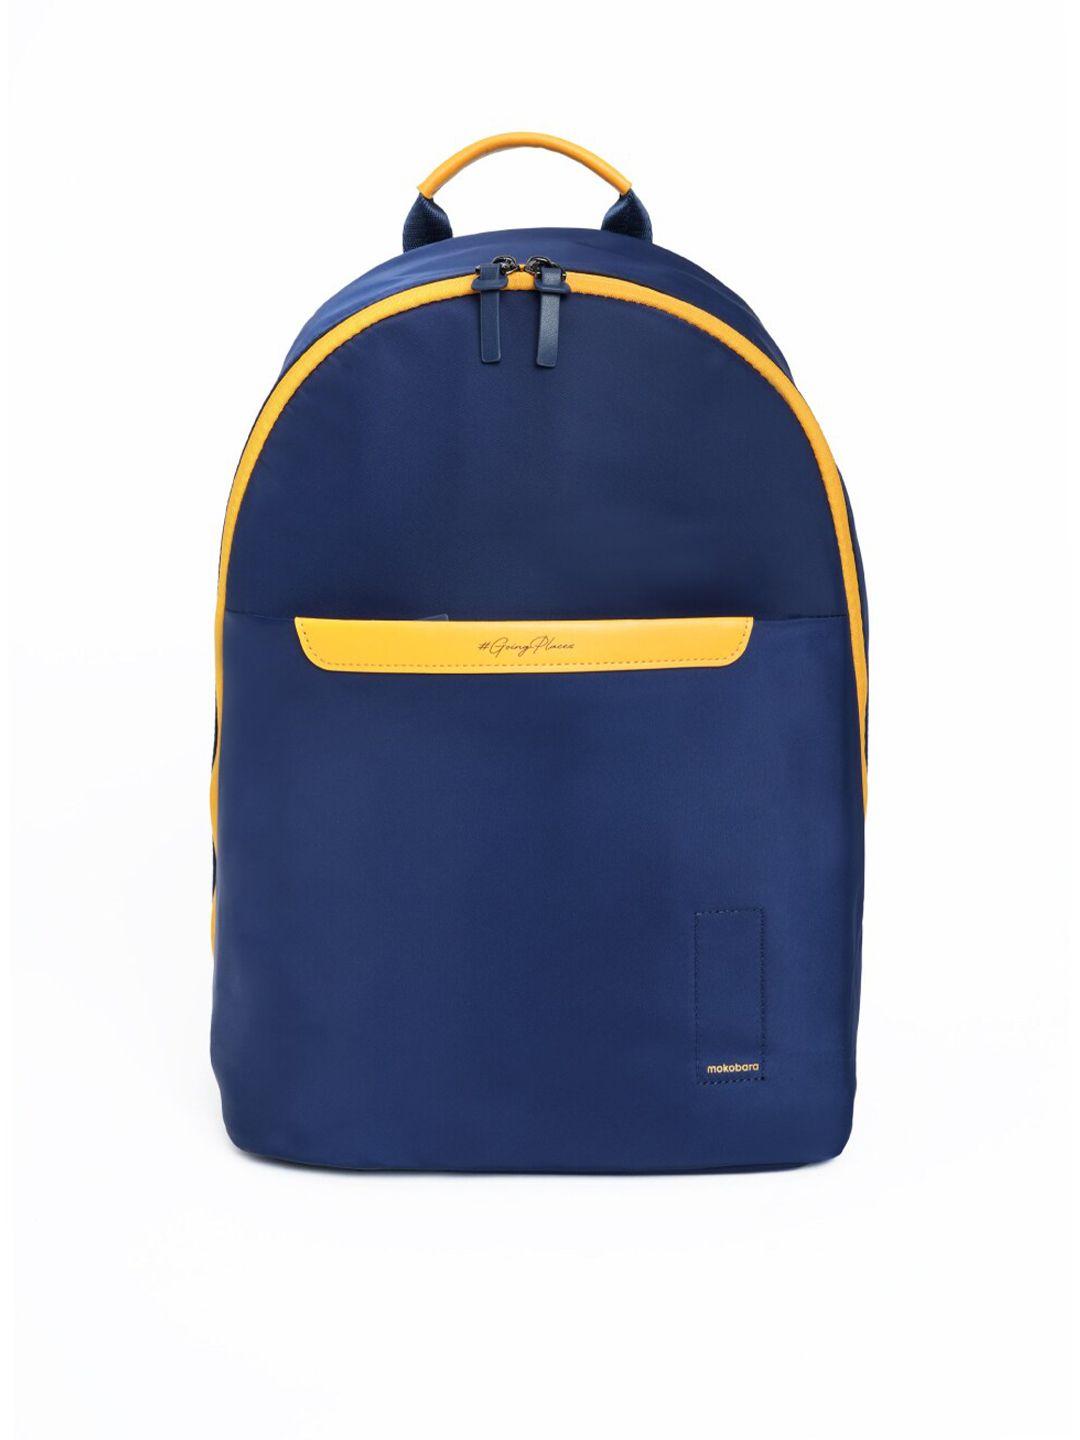 mokobara ergonomic water resistant zip around backpack